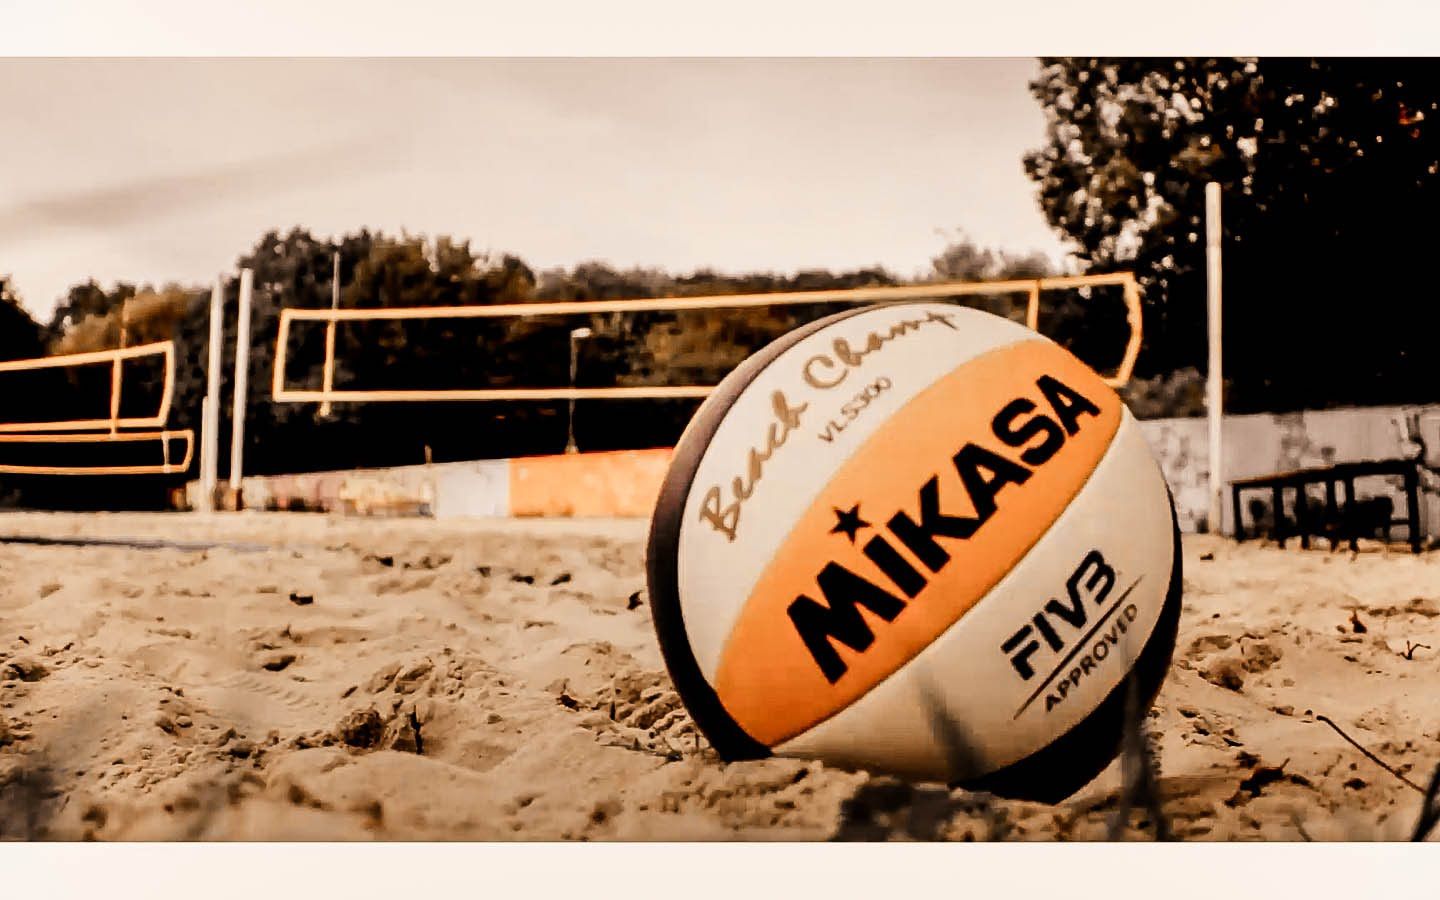 fondos de pantalla de voleibol para tu teléfono,vóleibol,voleibol de playa,vóleibol,balón de fútbol,equipo deportivo